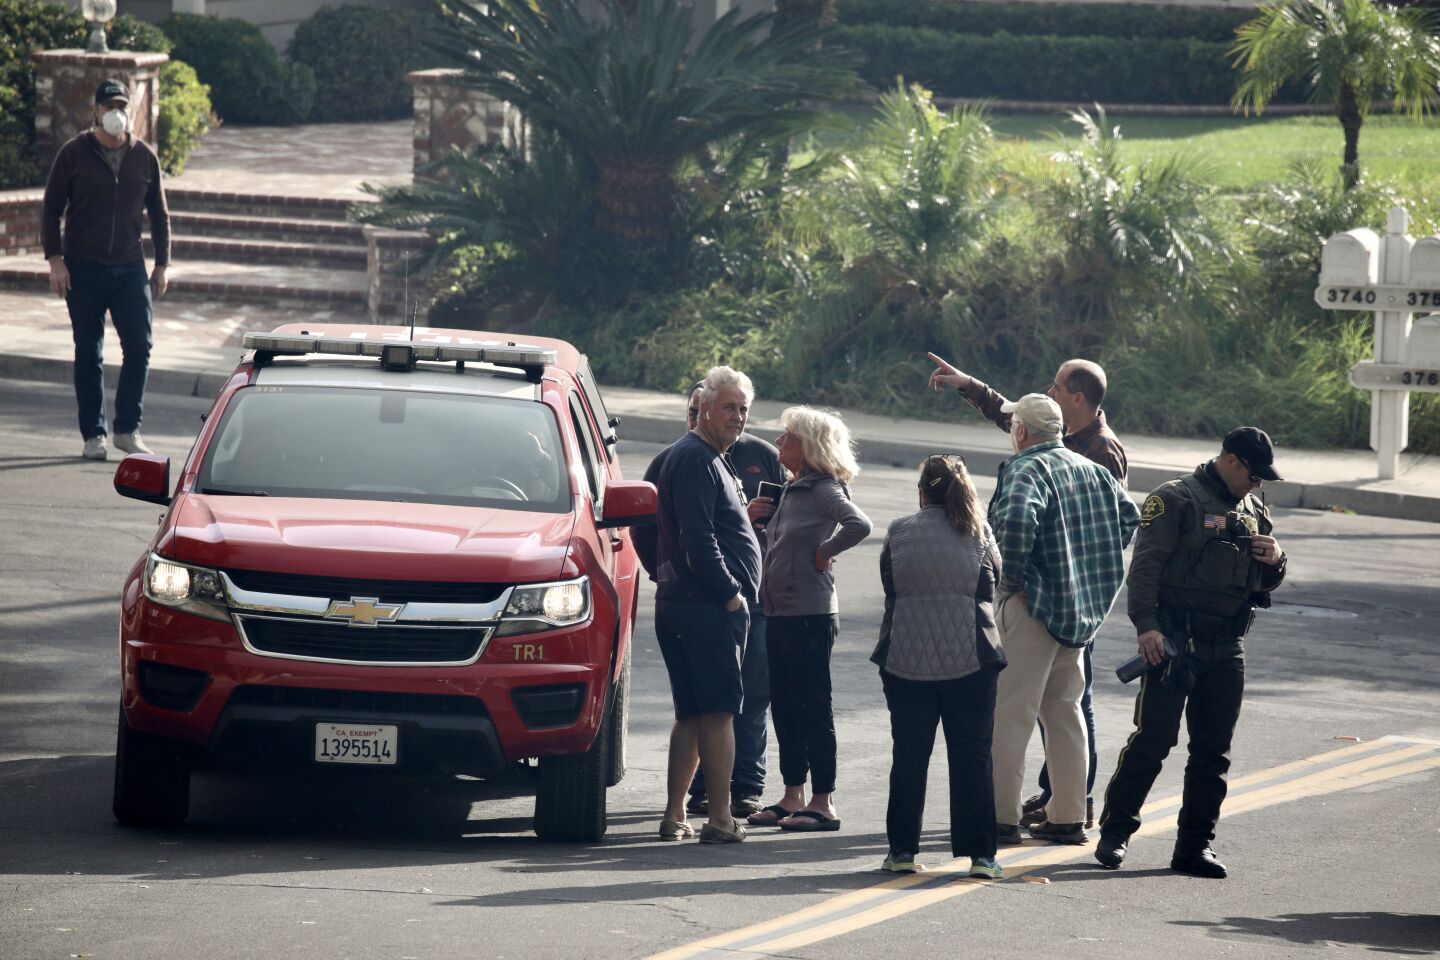 Yorba Linda residents gather around an Orange County Fire Authority vehicle.